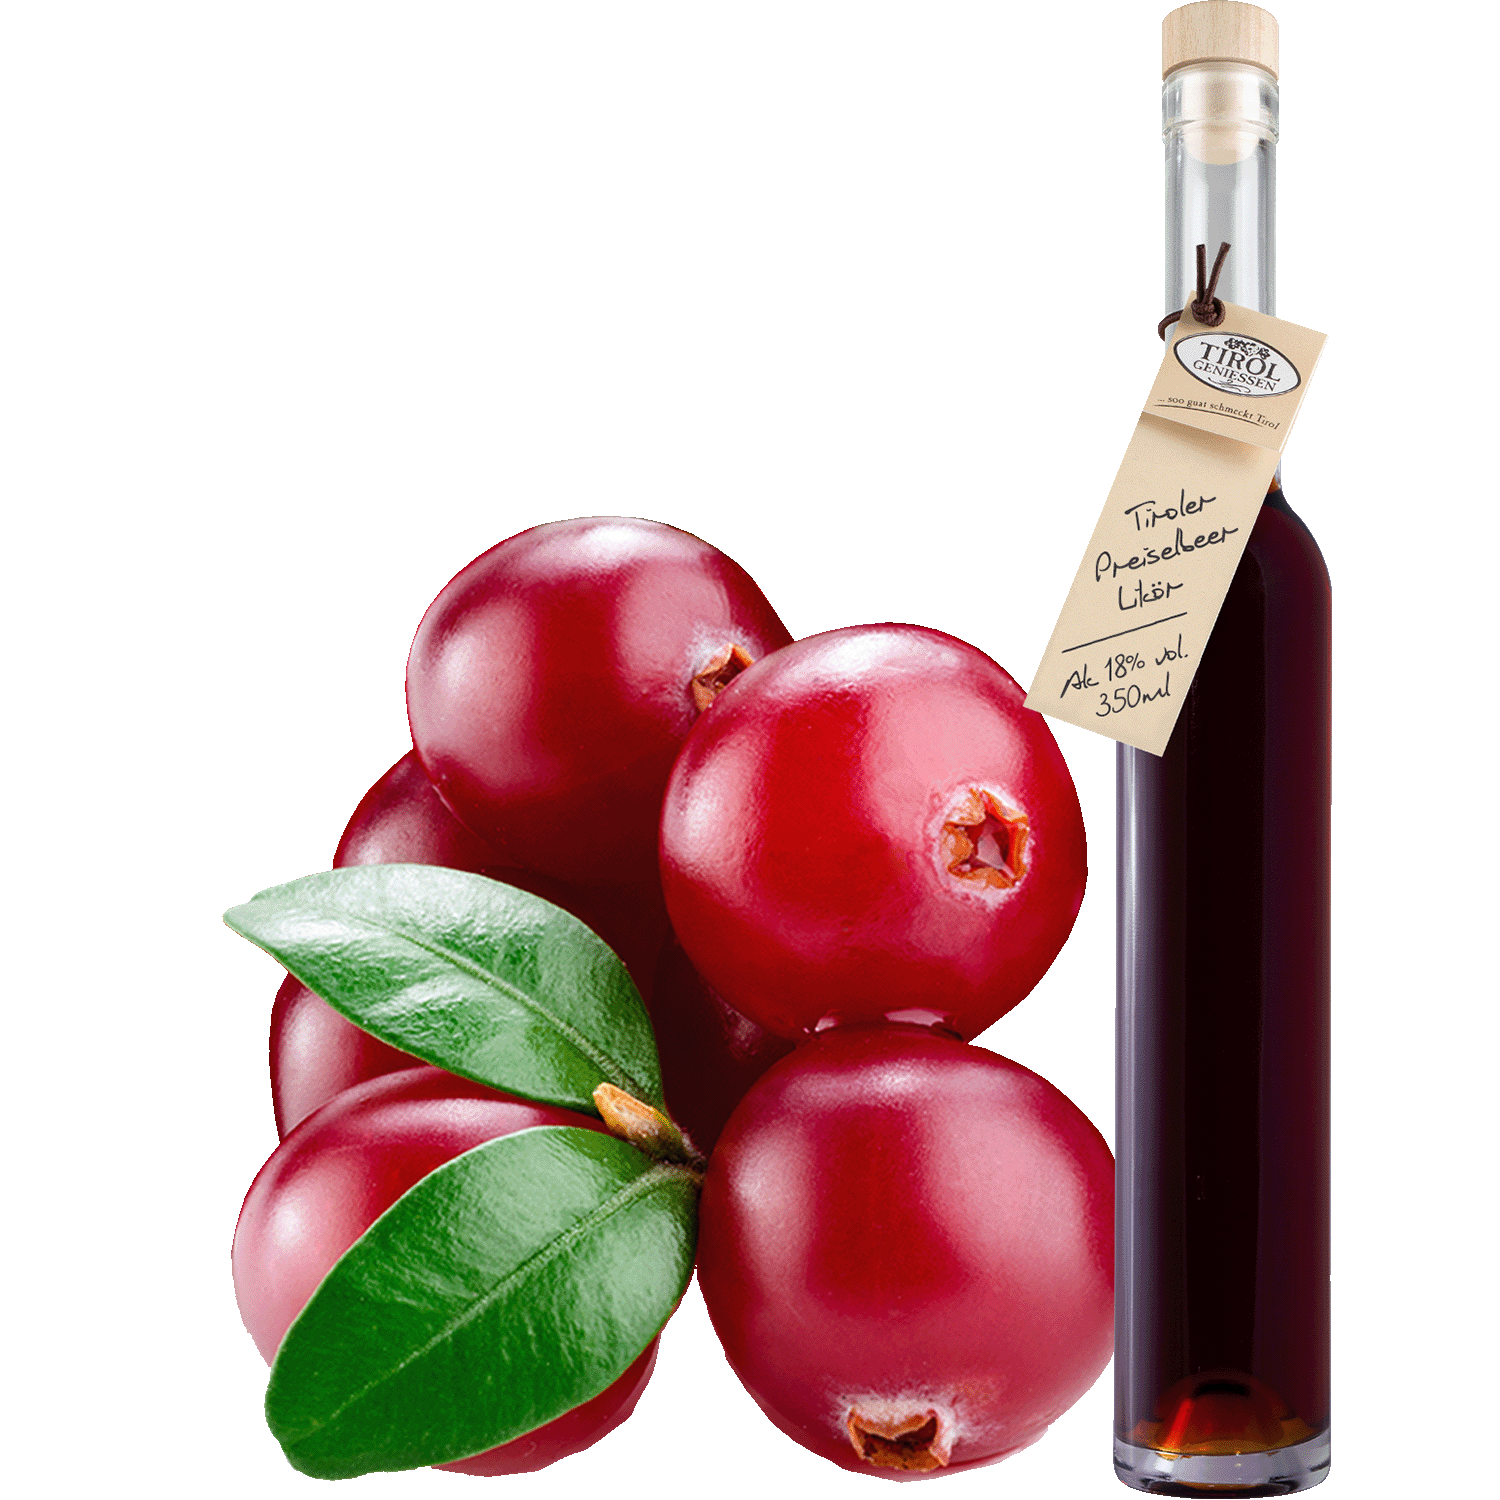 Lingonberry Liqueur in gift bottle from Austria from Tirol Geniessen